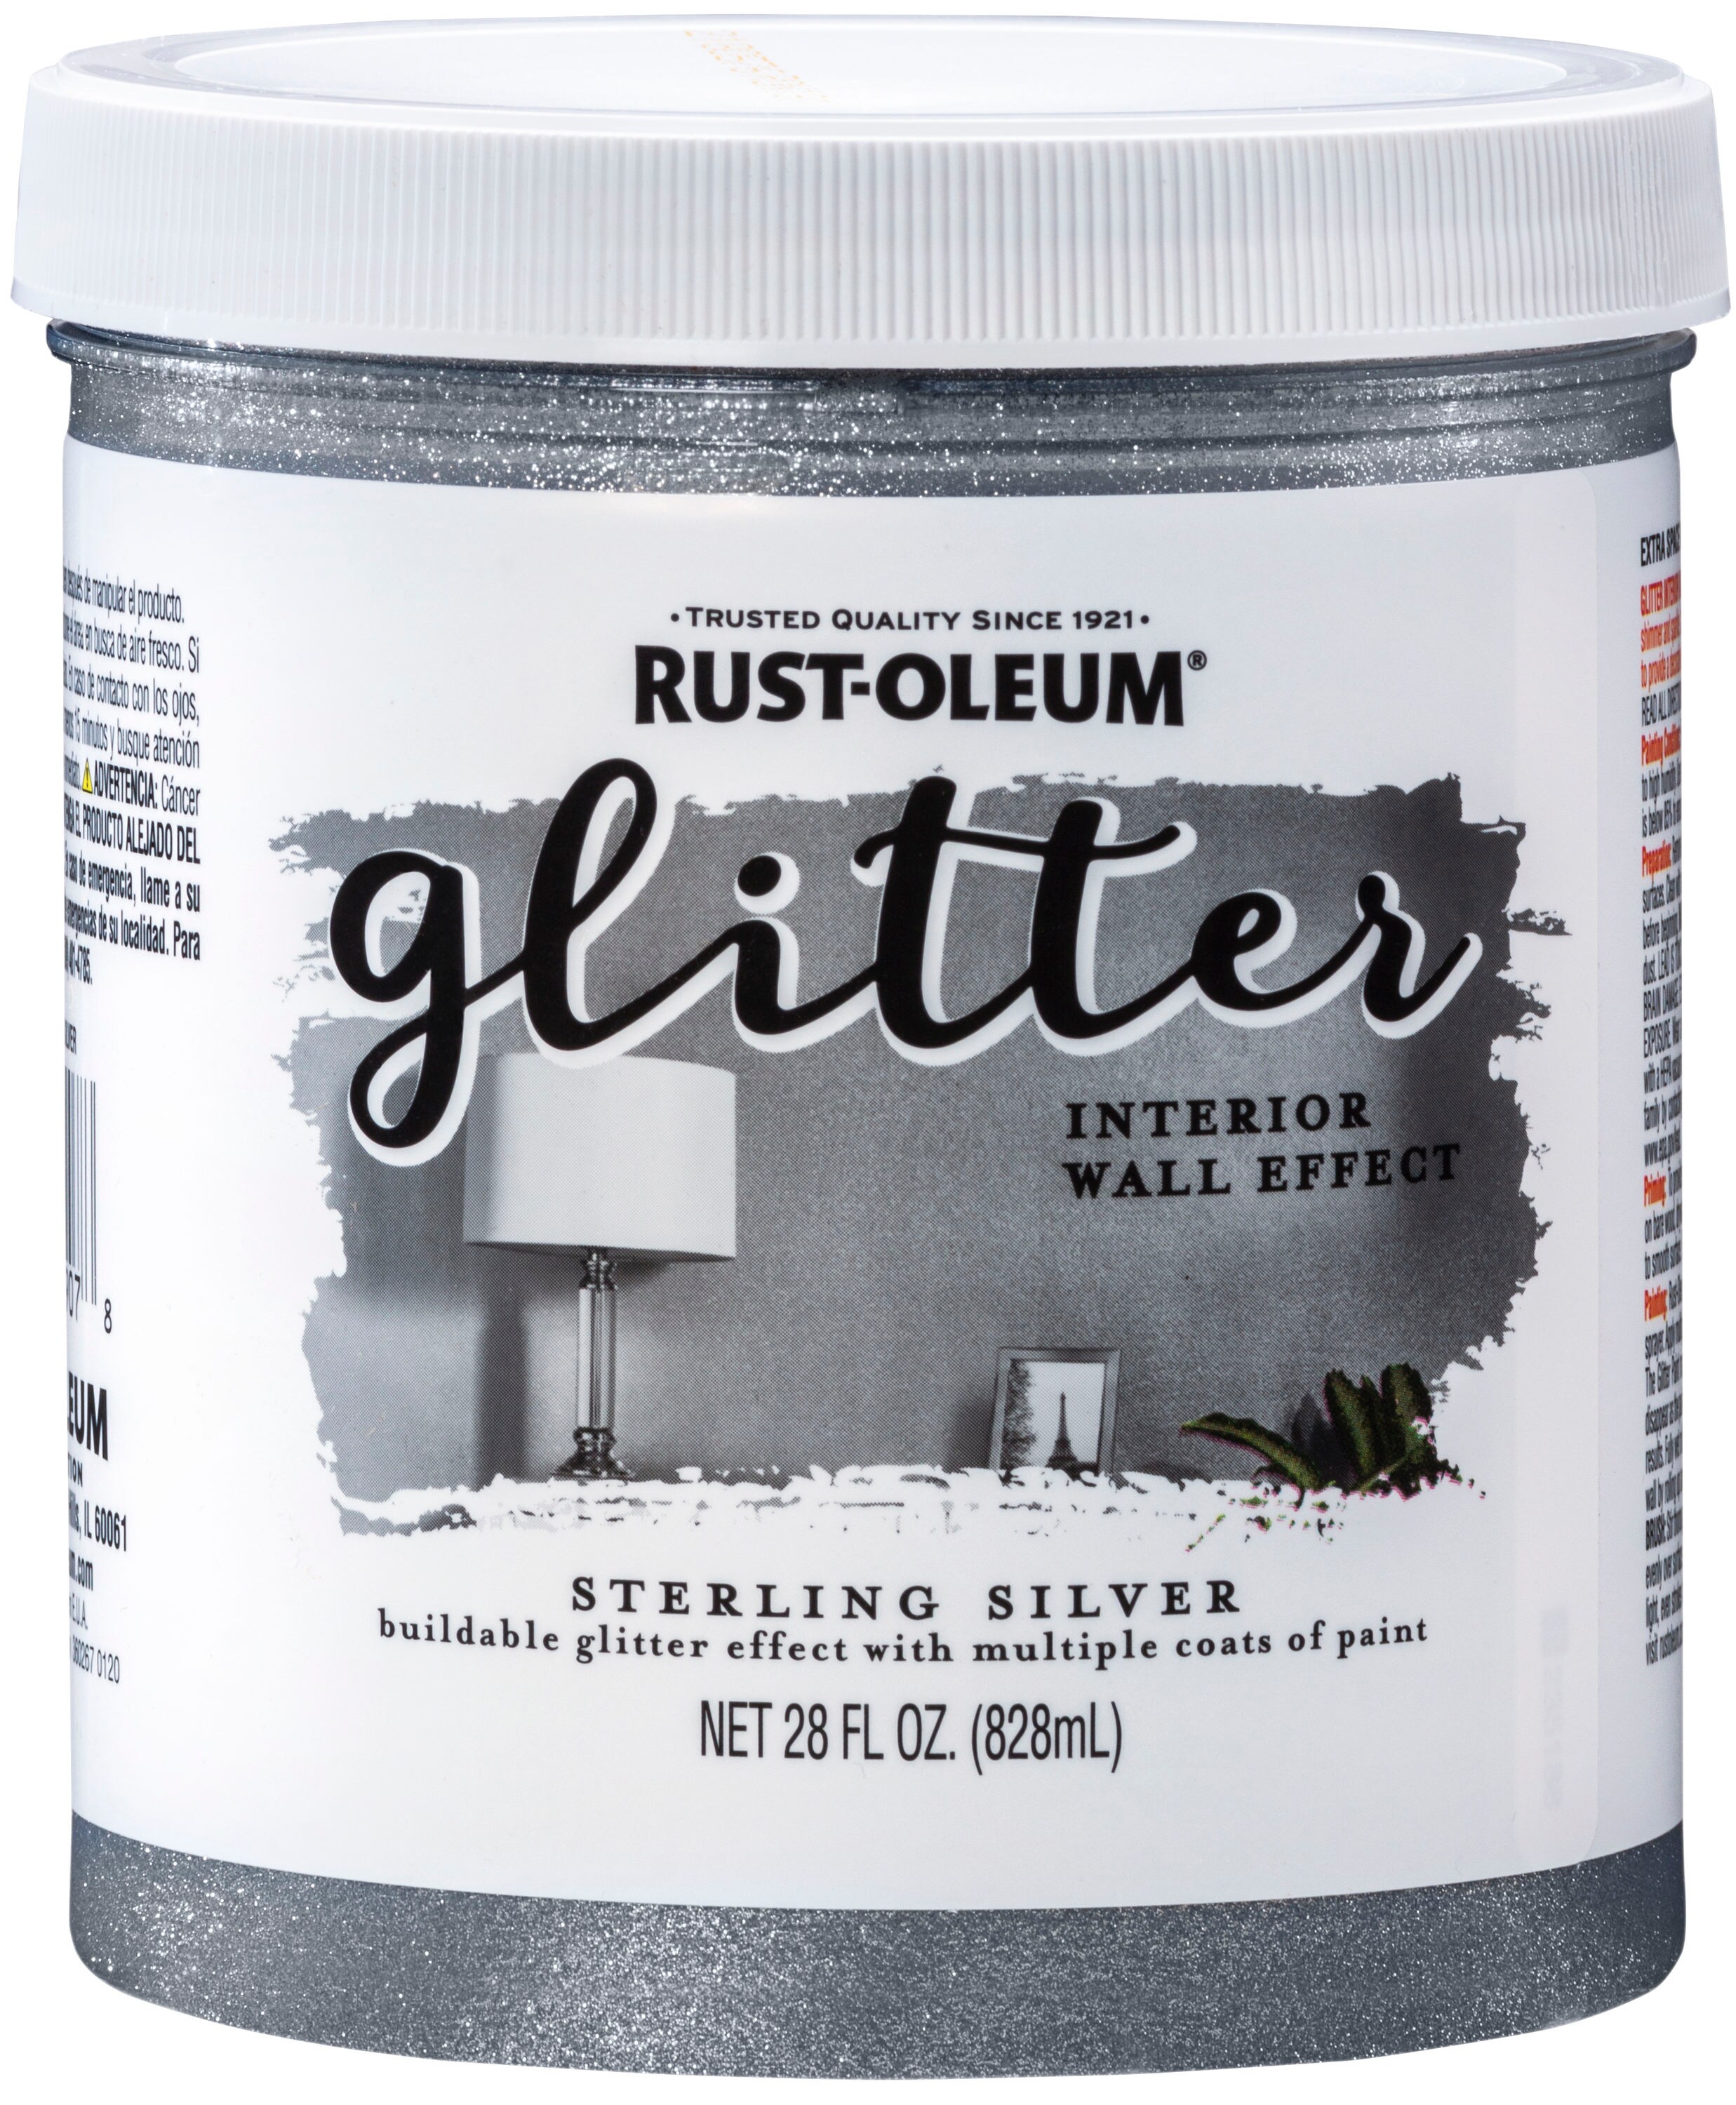 Rust-Oleum Imagine Silver Acrylic Glitter Paint (Half-Pint) in the